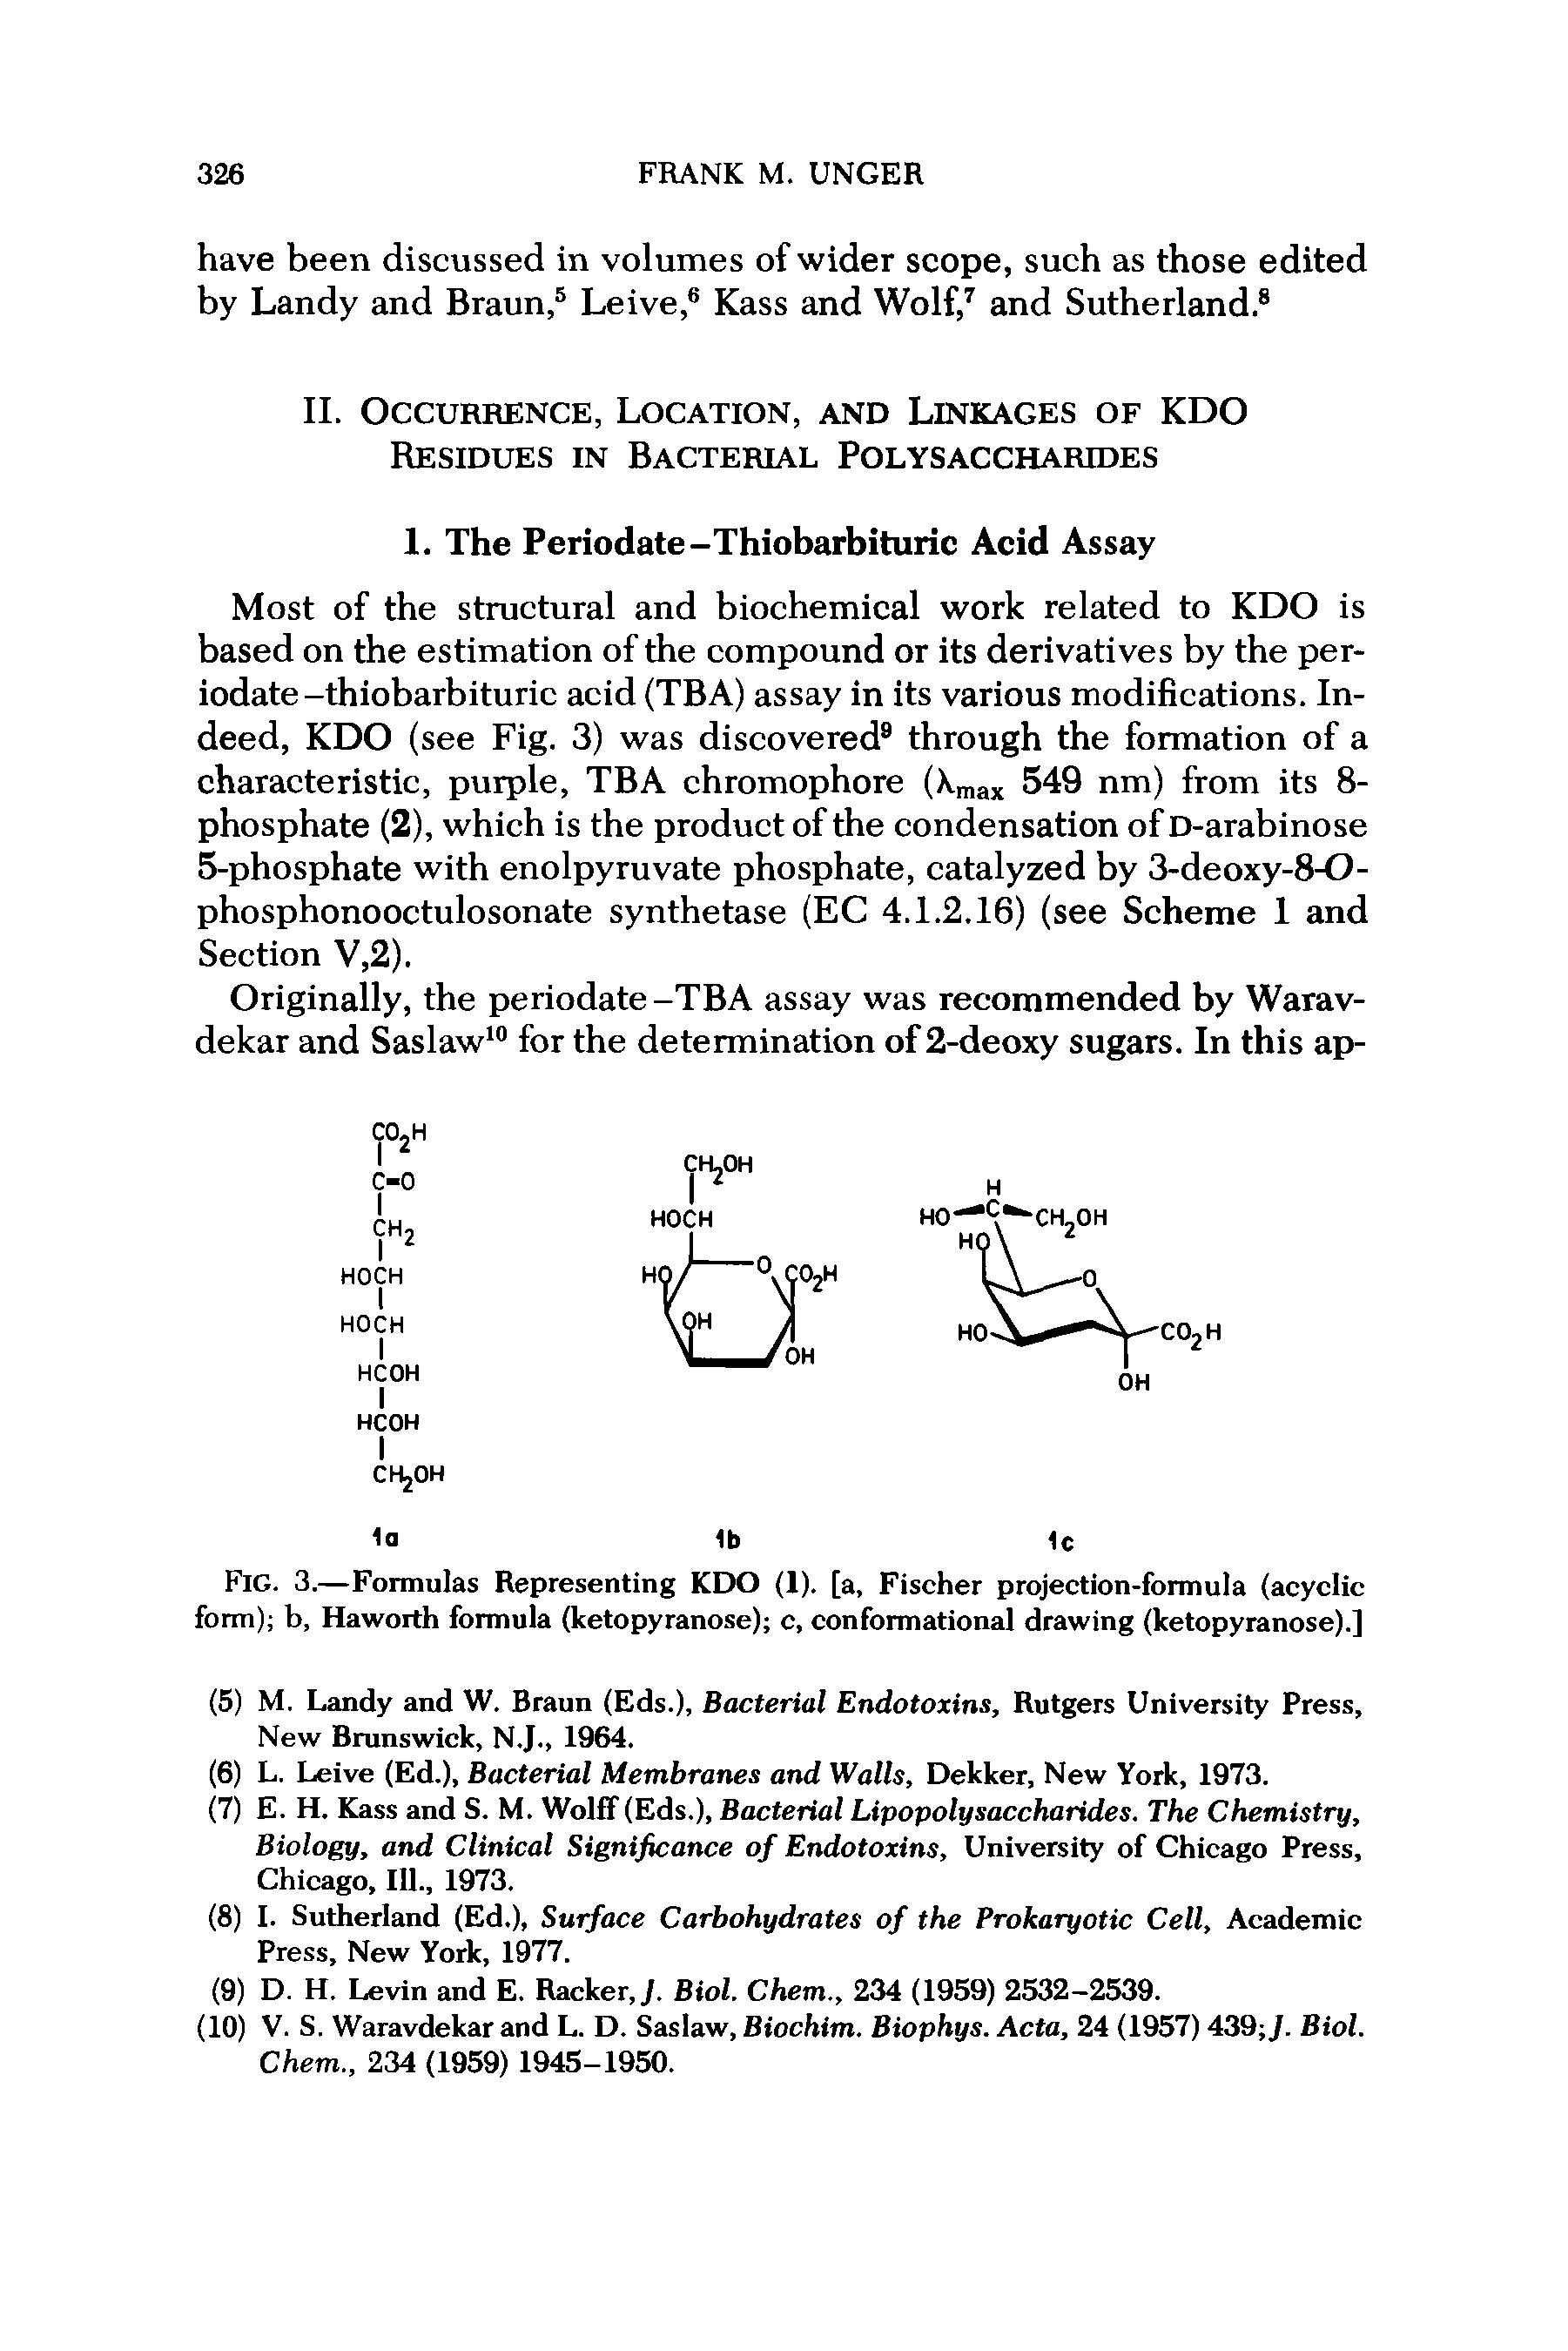 Fig. 3.—Formulas Representing KDO (1). [a, Fischer projection-formula (acyclic form) b, Haworth formula (ketopyranose) c, conformational drawing (ketopyranose).]...